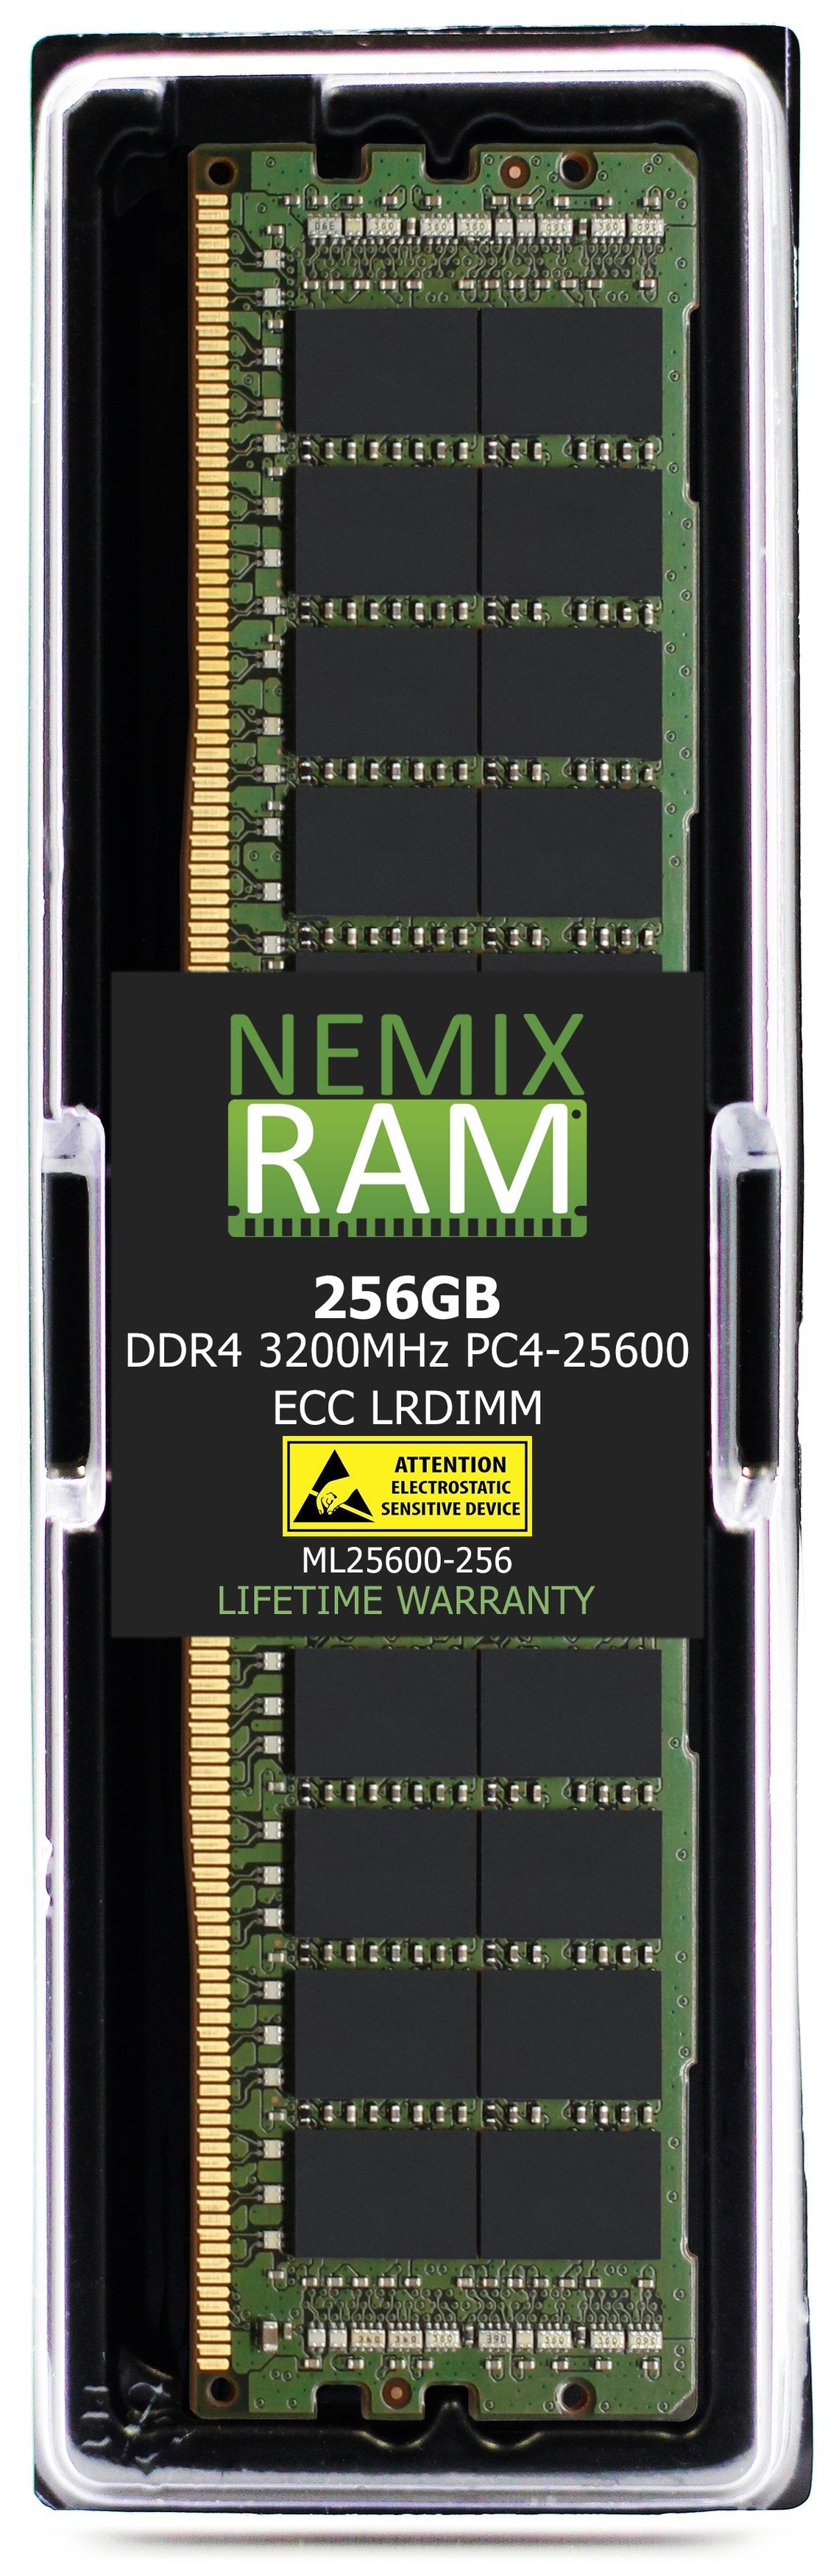 Cisco UCS-ML-256G8RW 256GB DDR4 3200 PC4-25600 LRDIMM Compatible Memory Upgrade